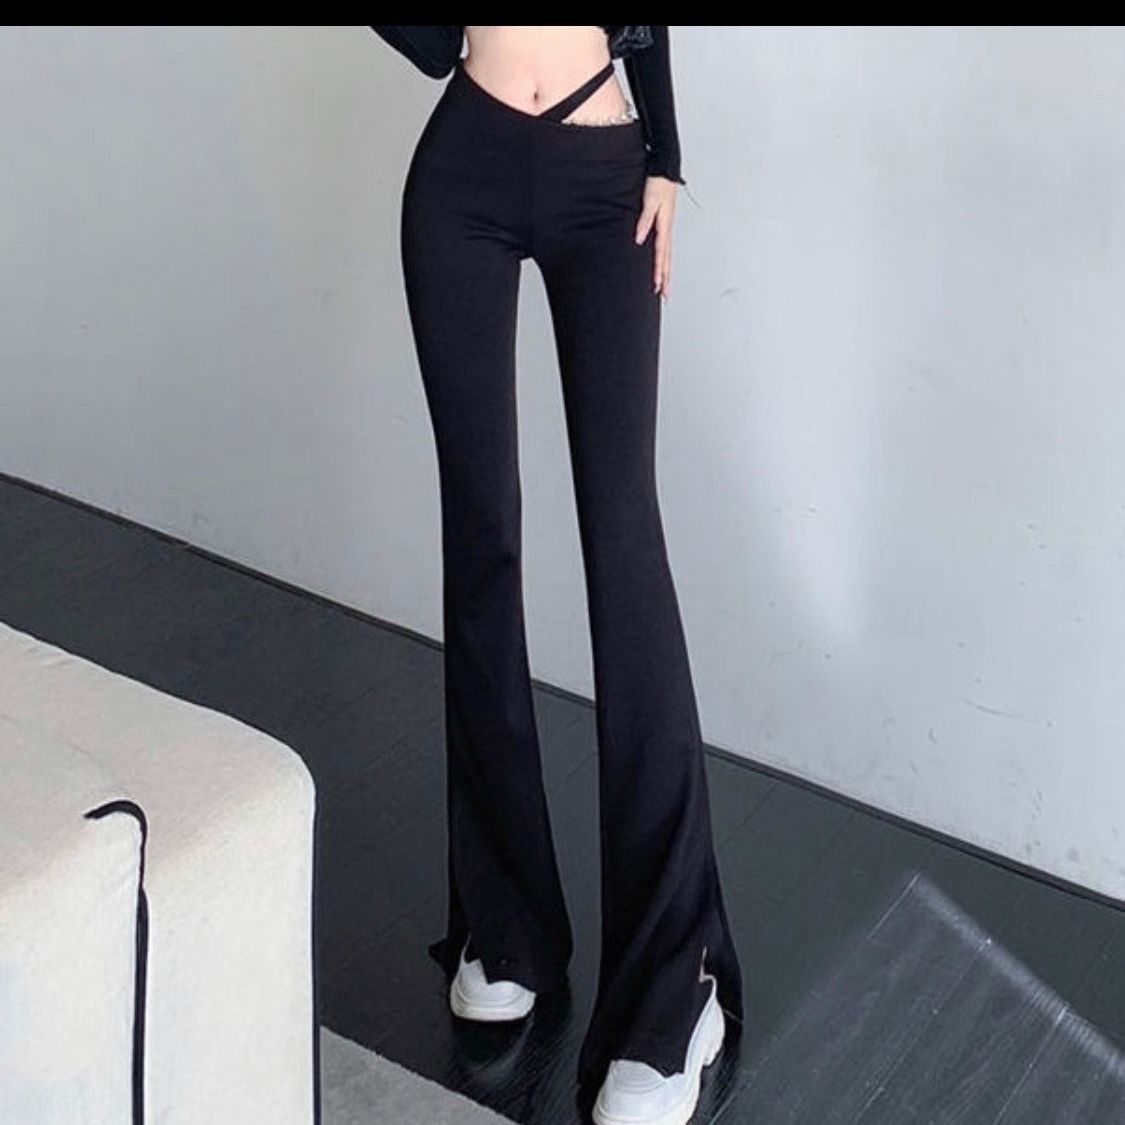  new design sense chain hollow black high waist casual mopping micro boot pants slit hot girl slim wide legs